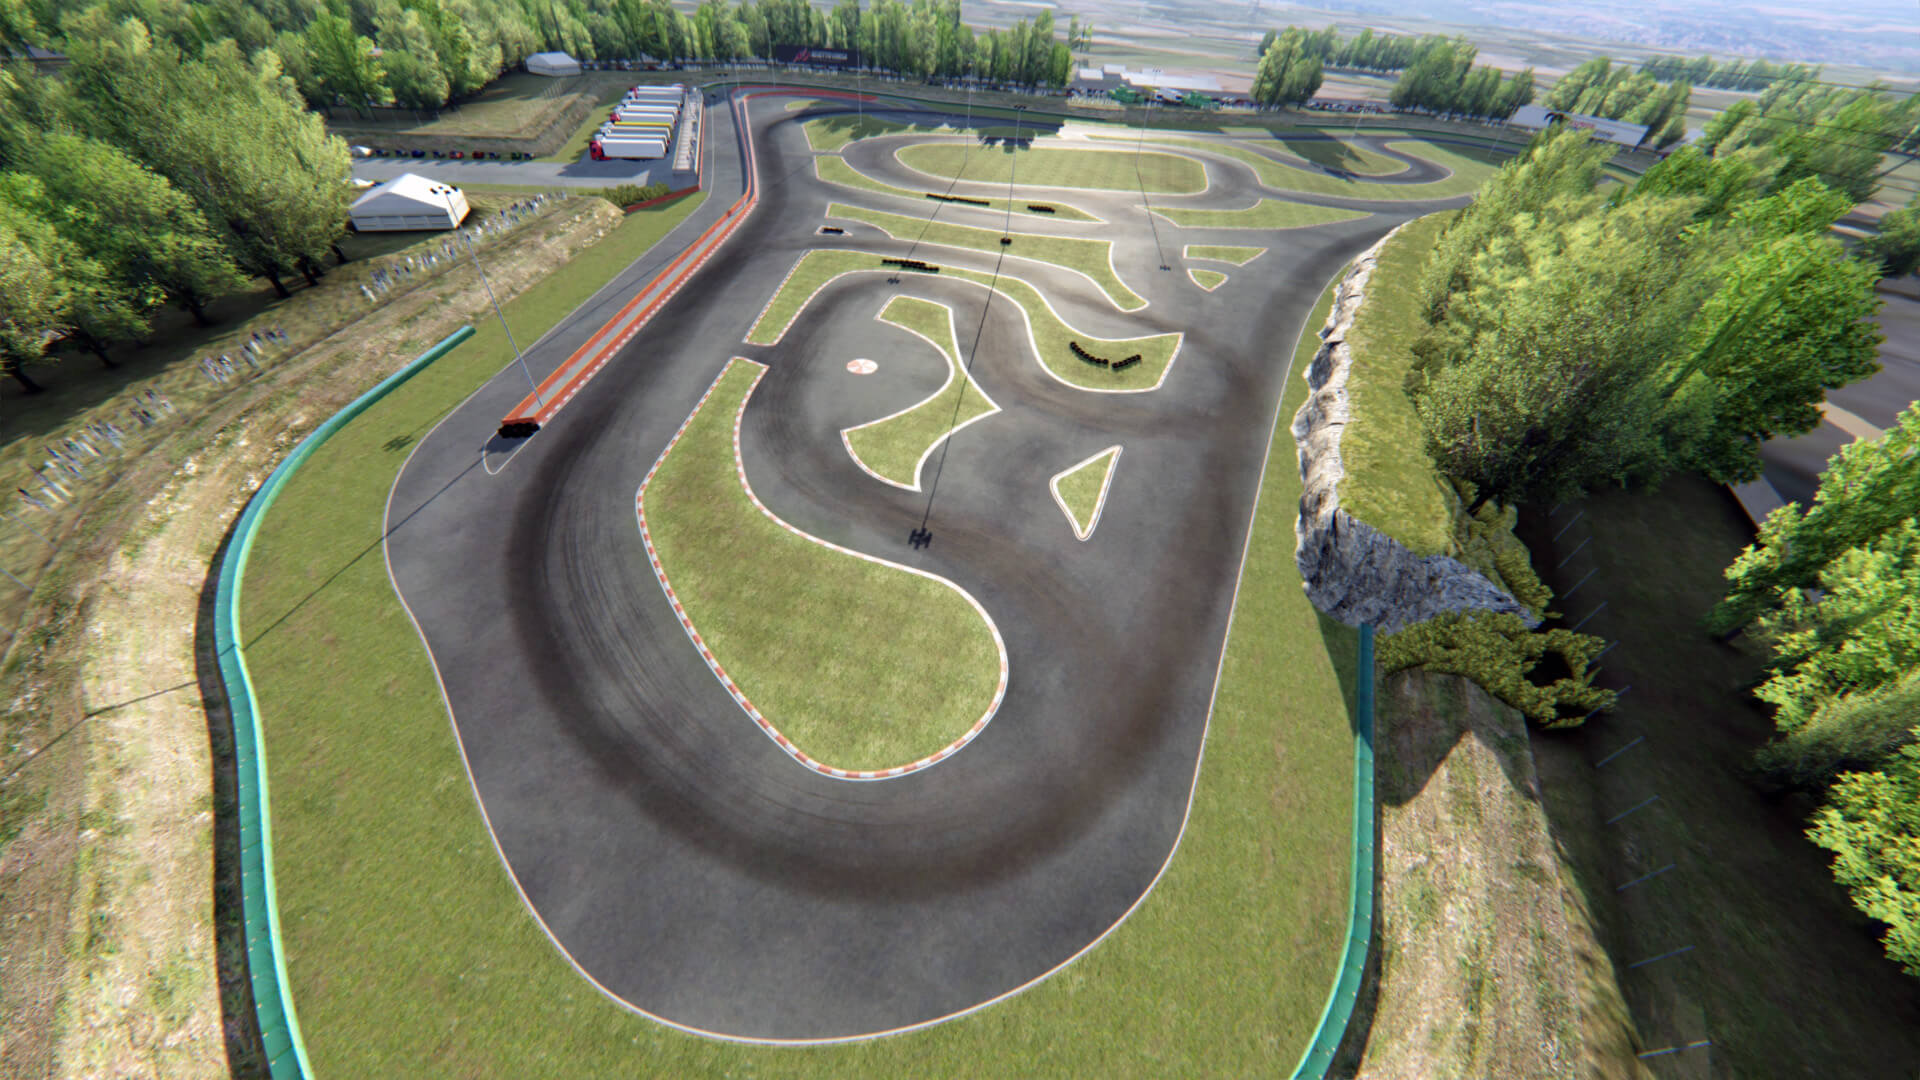 Assetto corsa drift tracks